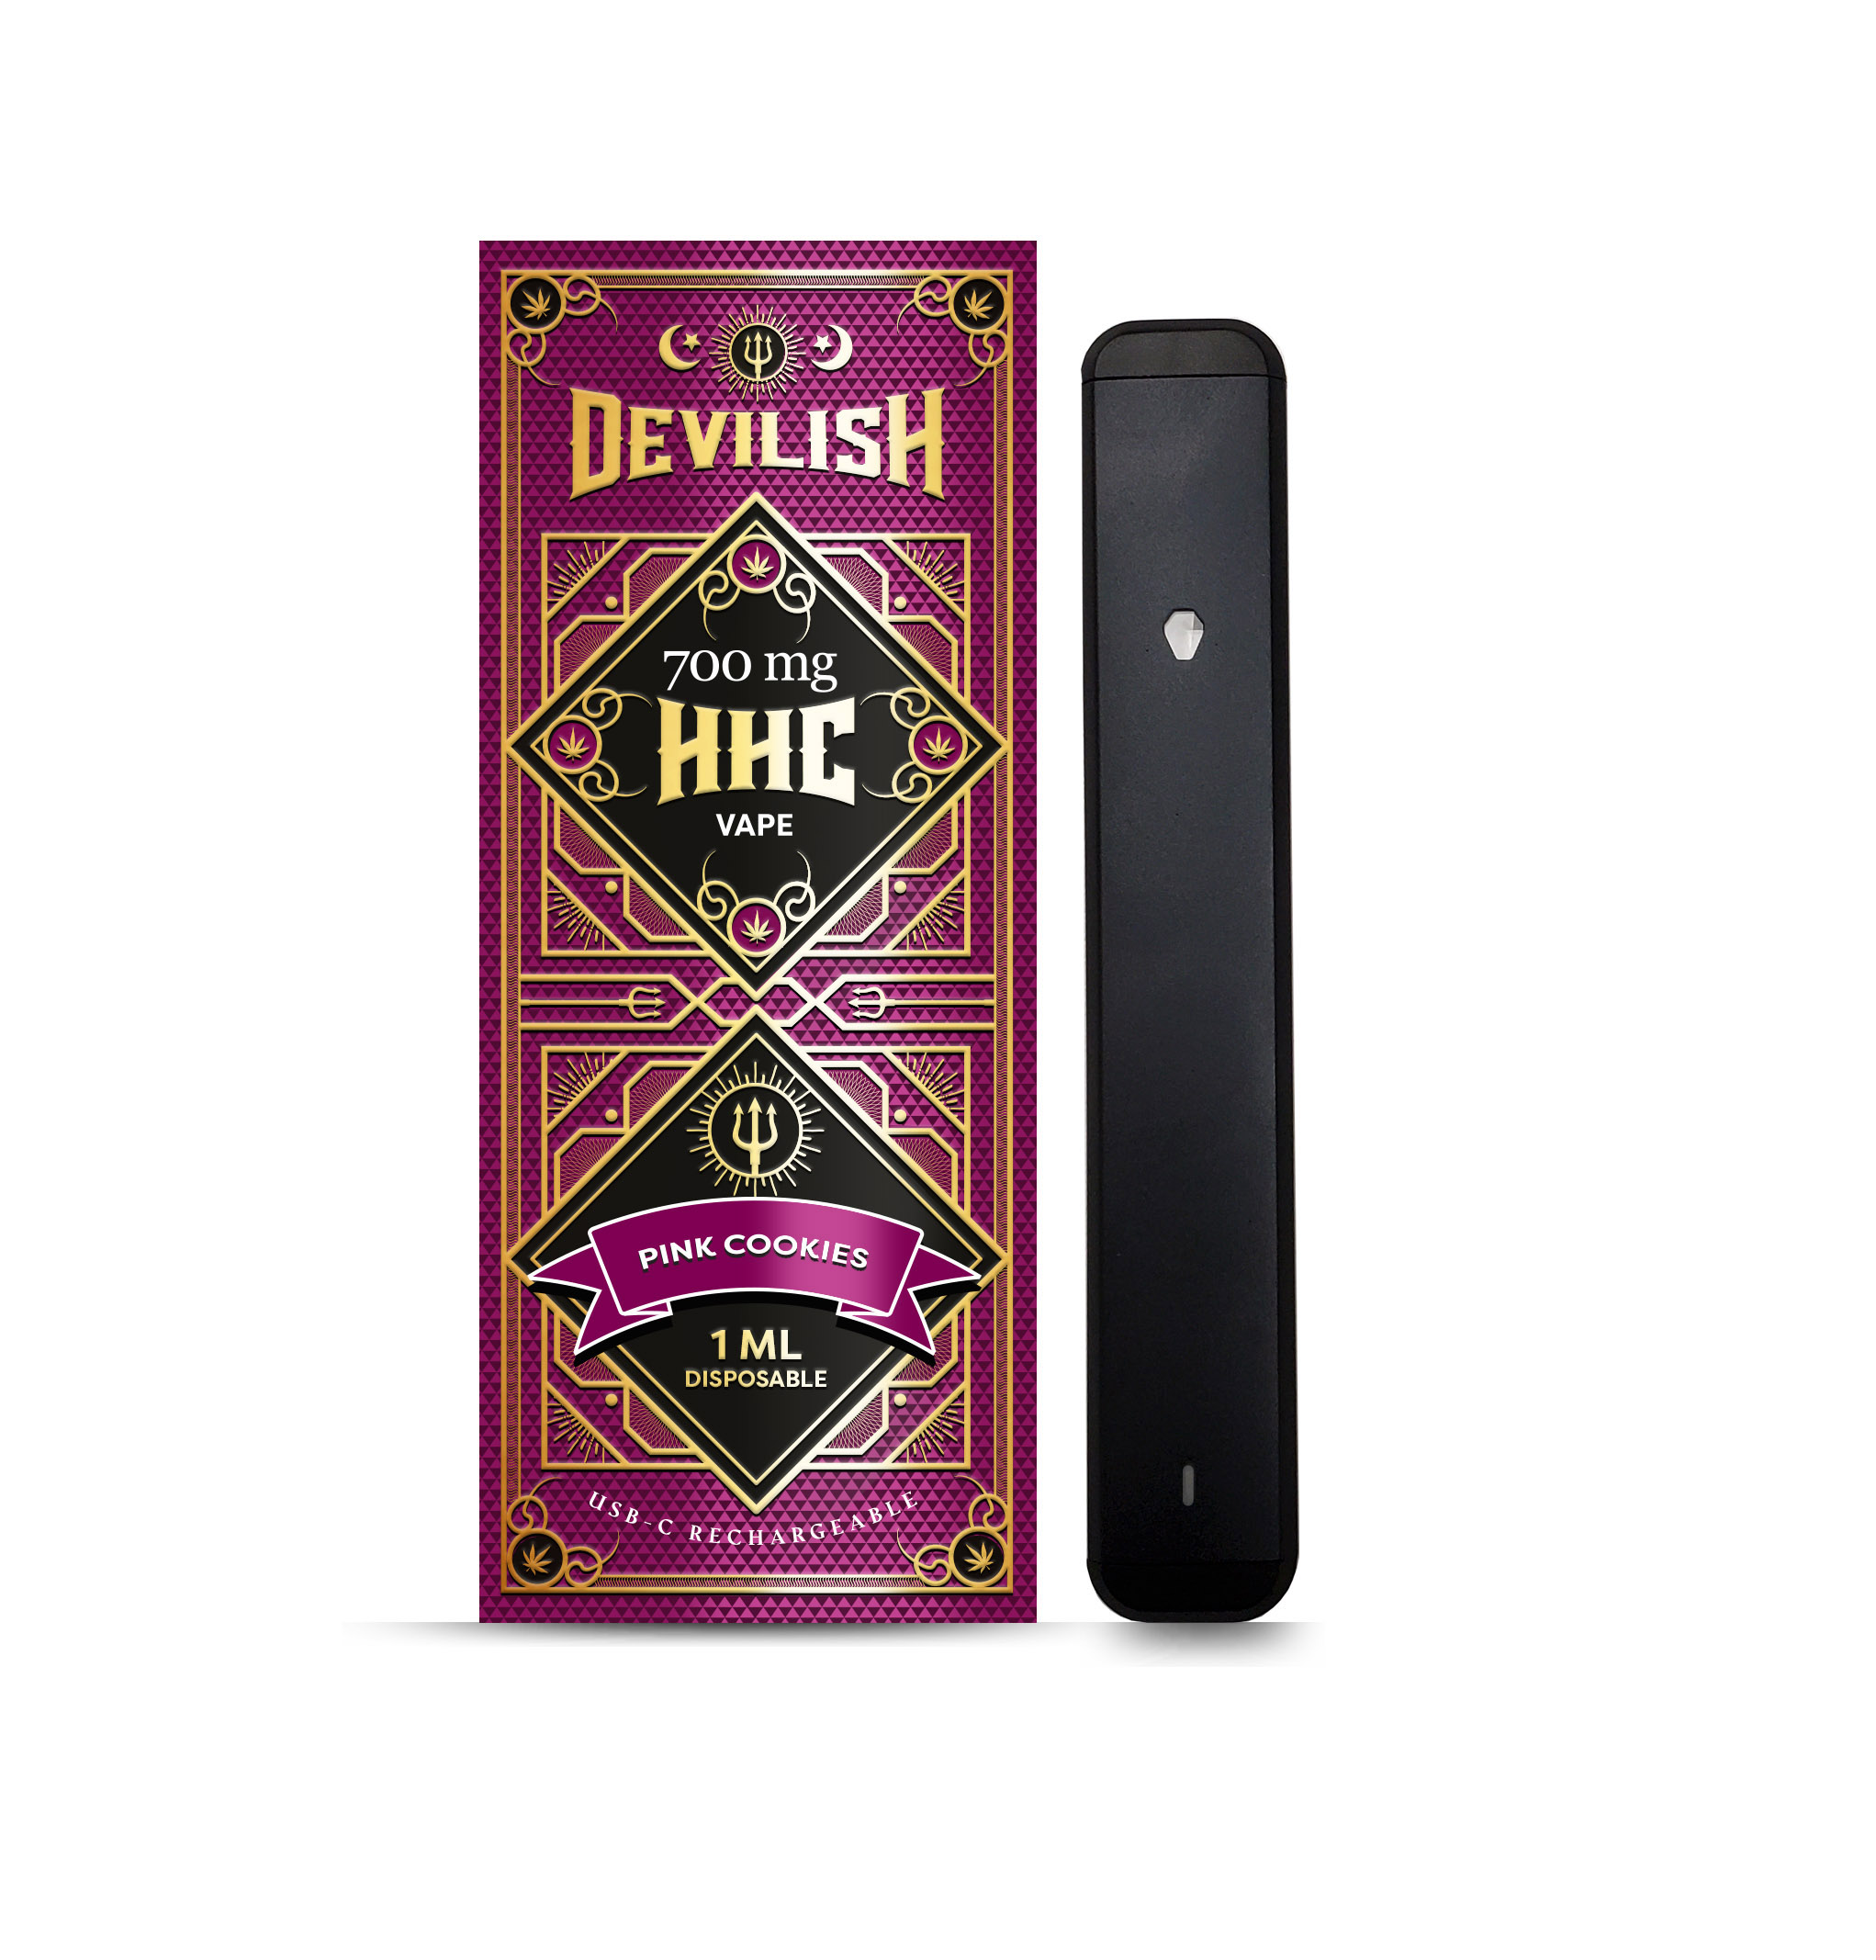 Devilish 700mg HHC Disposable Vape Pen, Pink Cookies